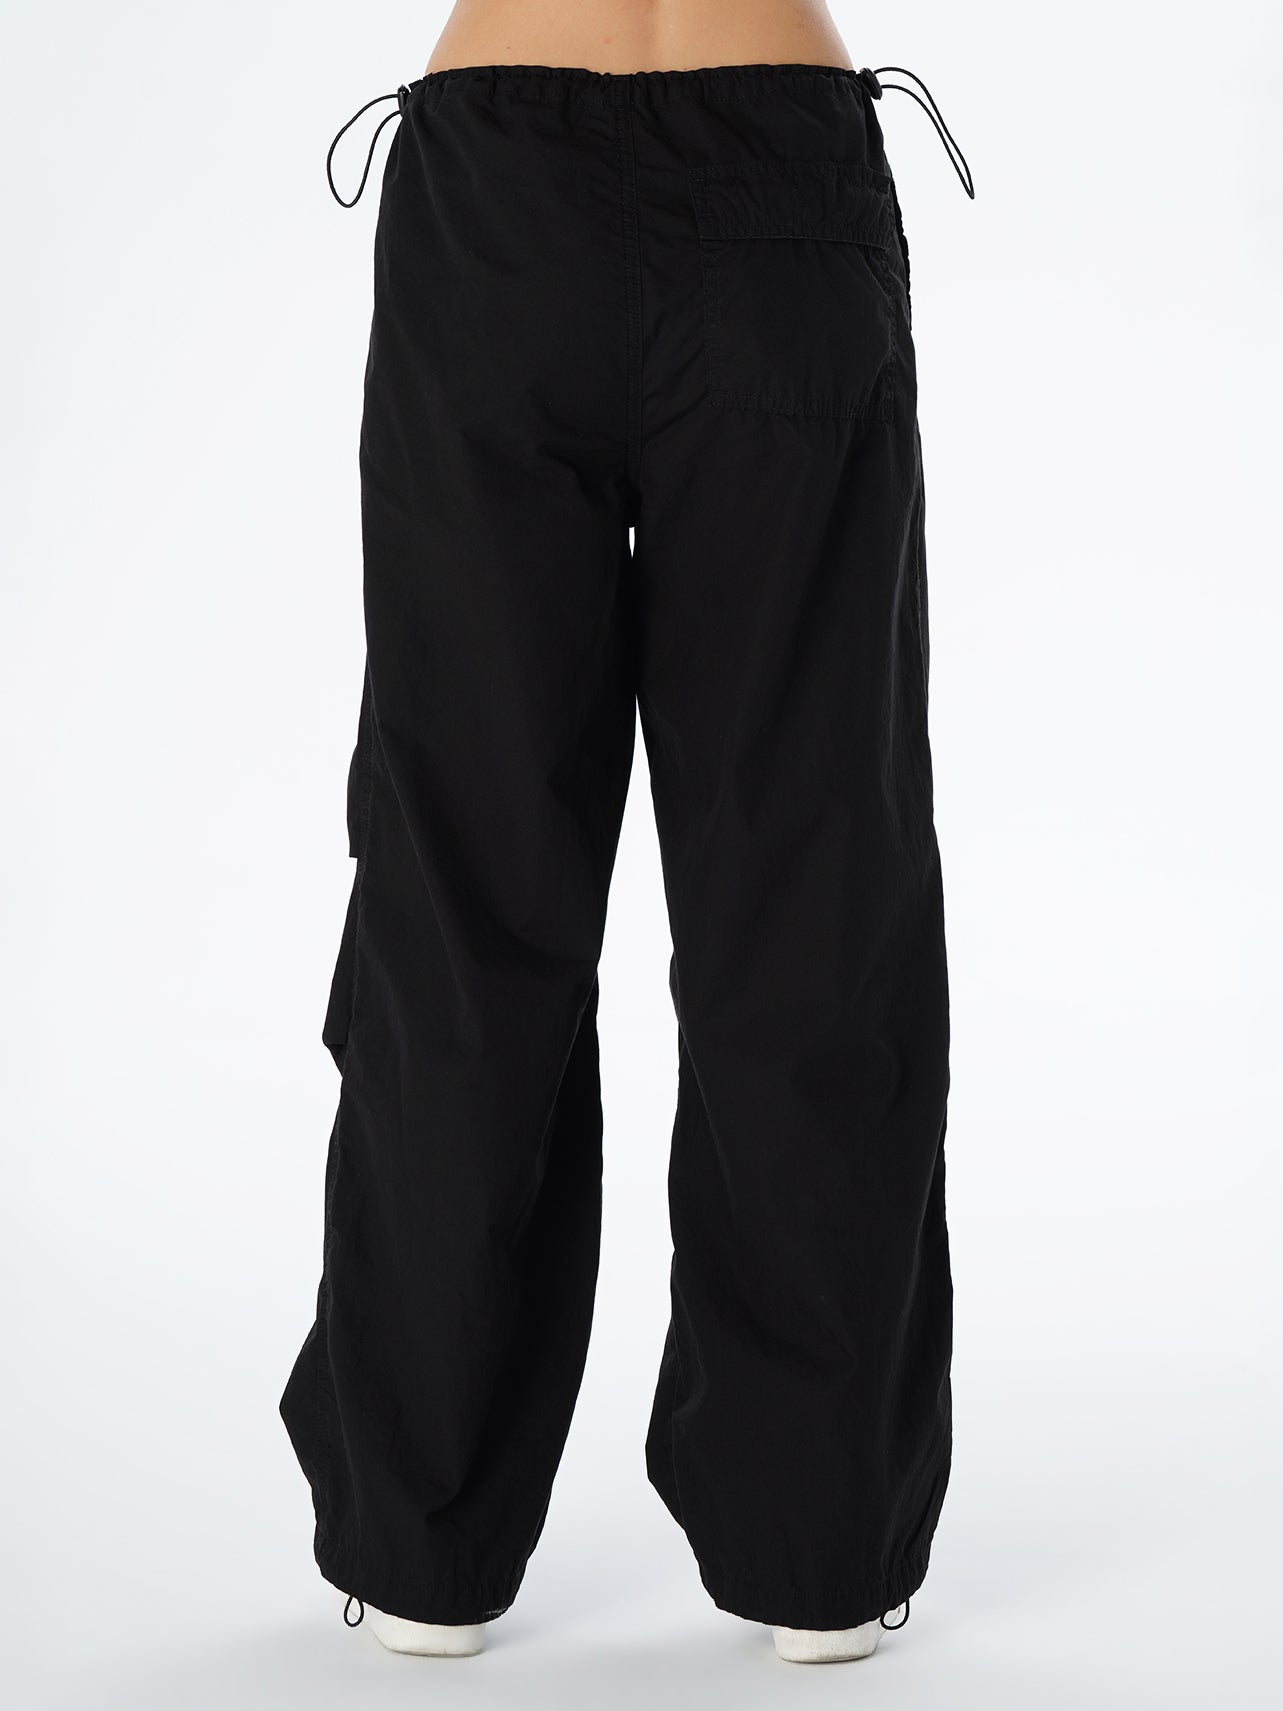 Women's Parachute pants in black